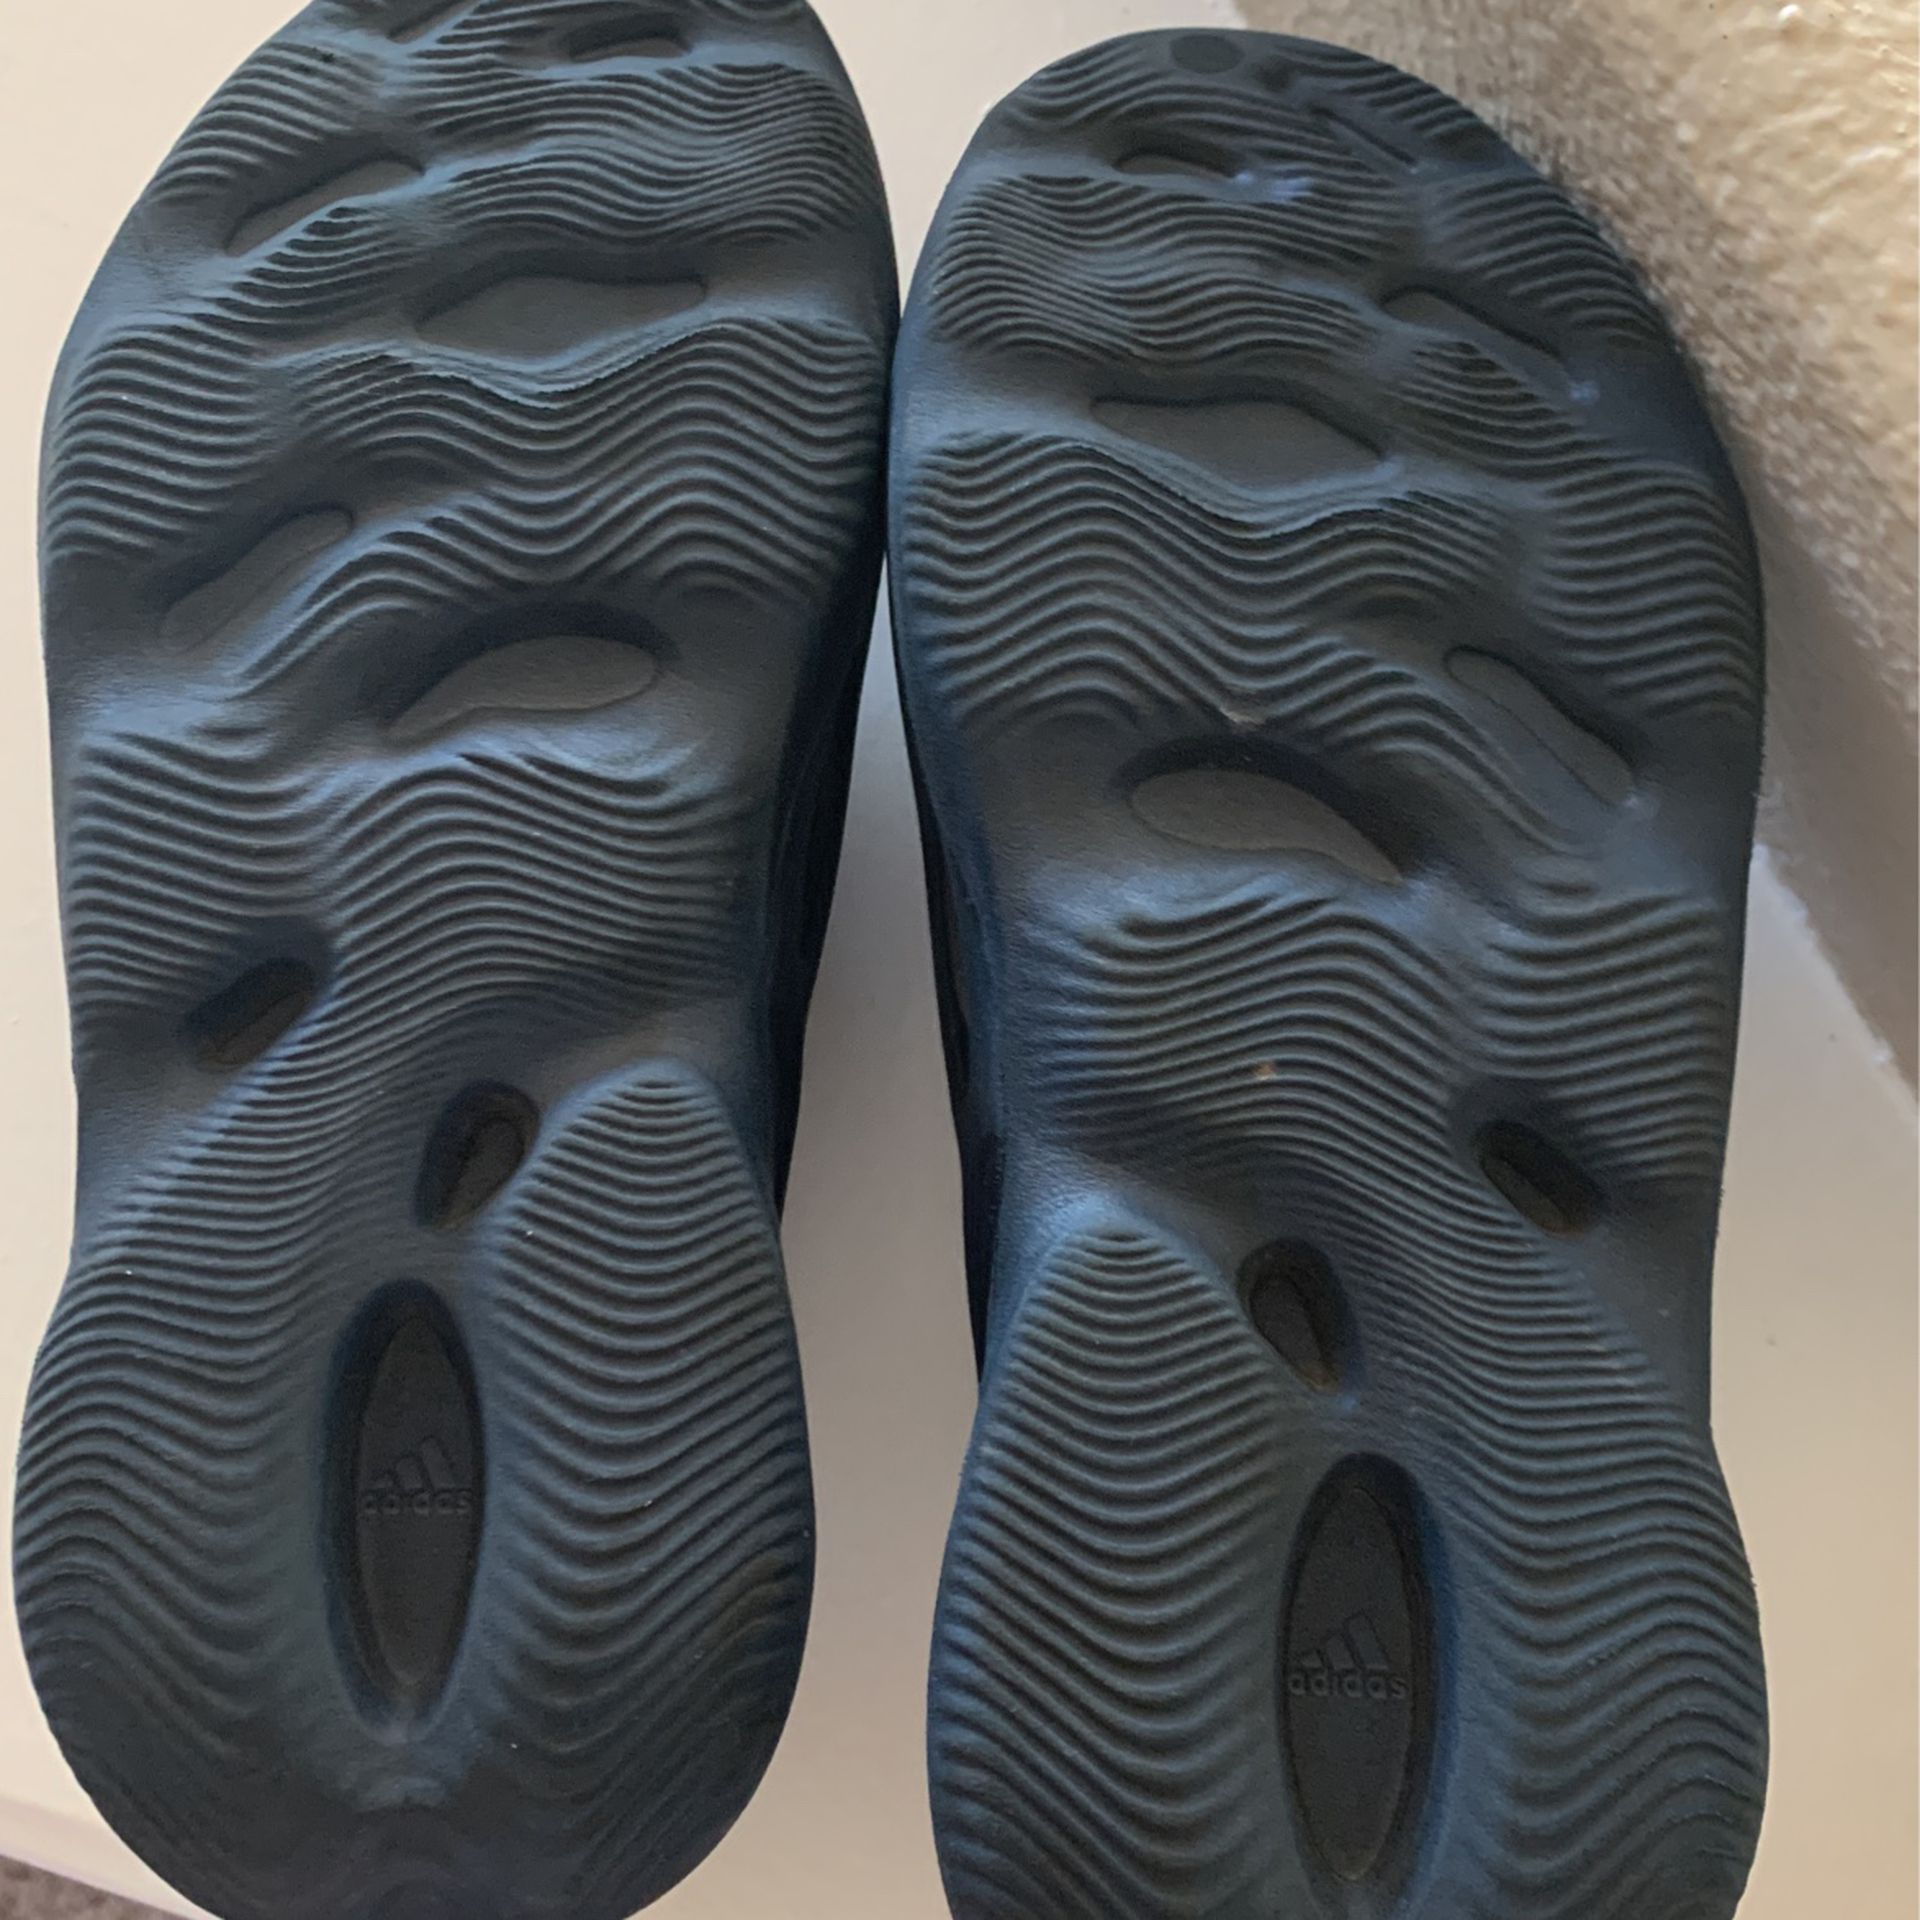 Yeezy Foam Runner “Sand Grey” US 9 for Sale in Canoga Park, CA - OfferUp